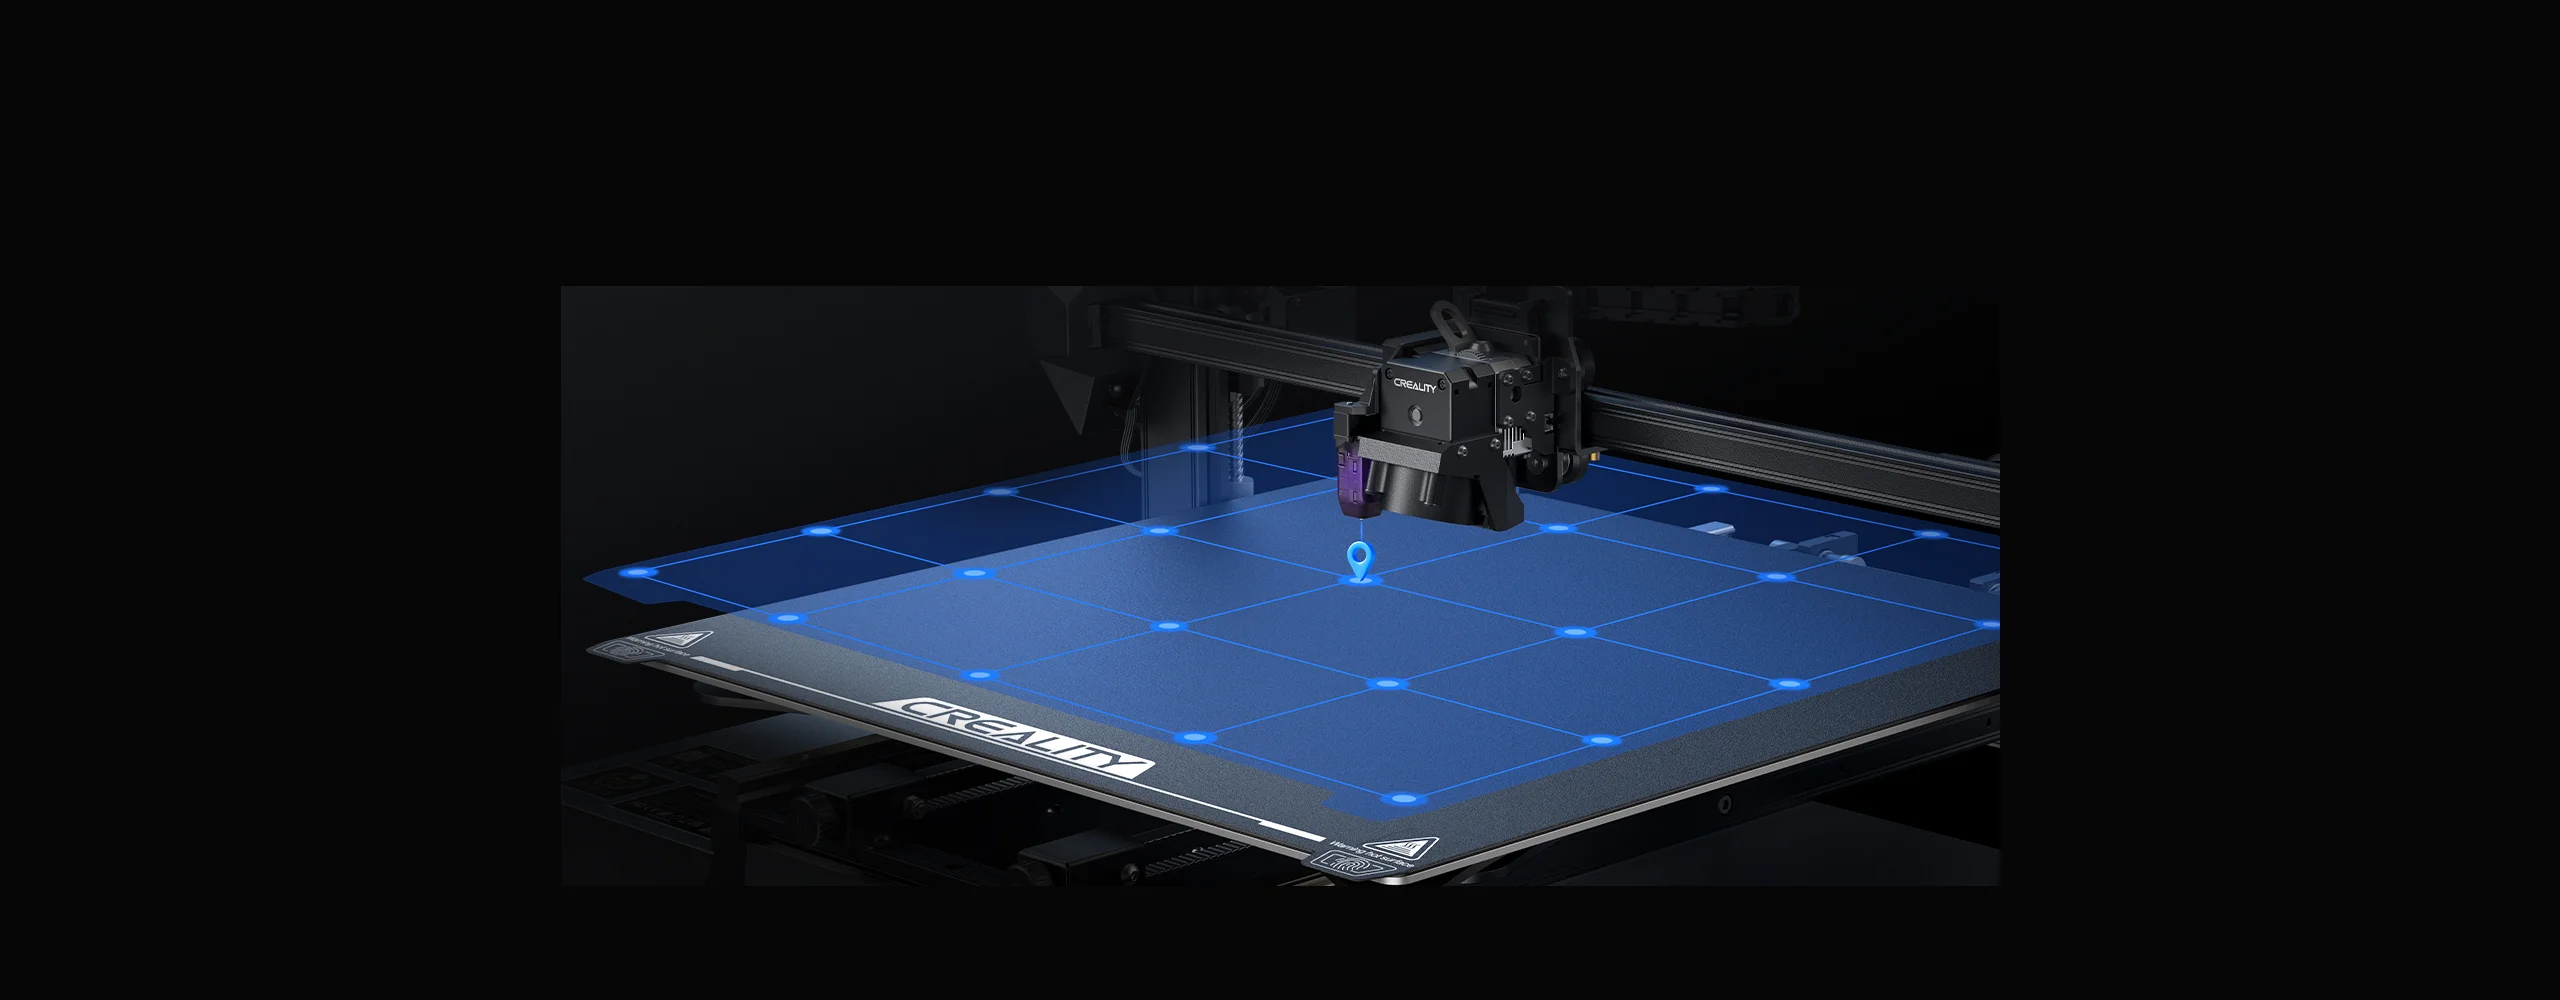 Achat imprimante 3D grand format Creality CR-M4